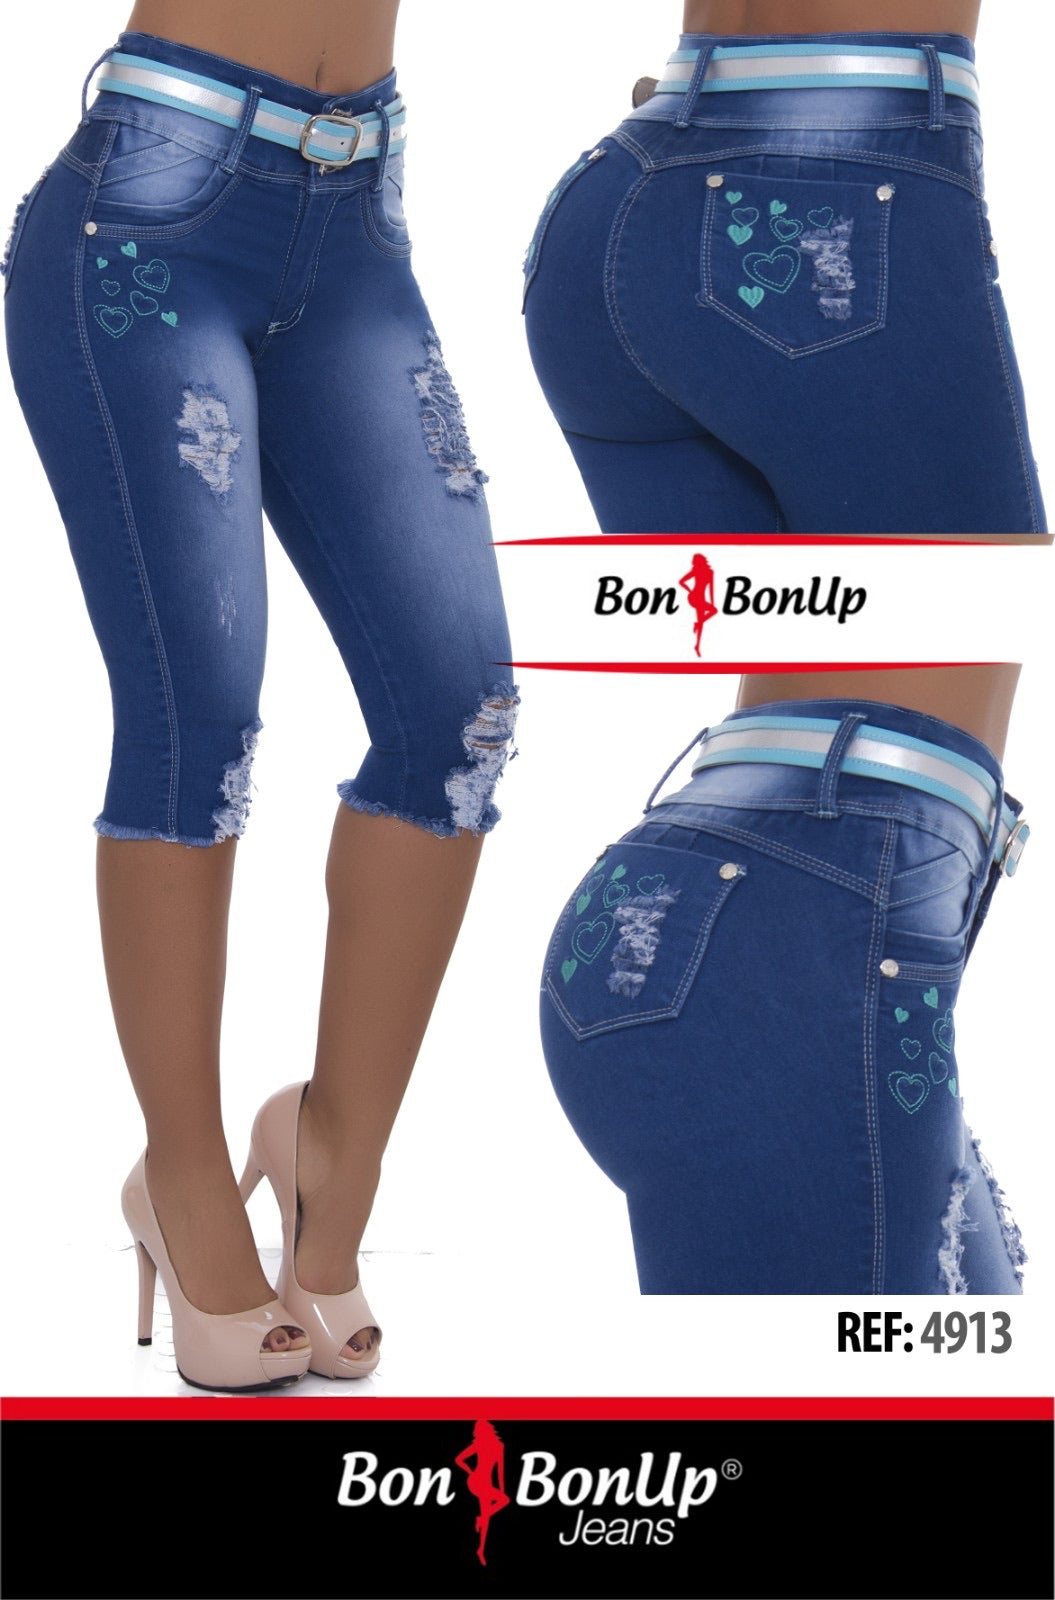 4913 BonBonUp Colombian Jeans